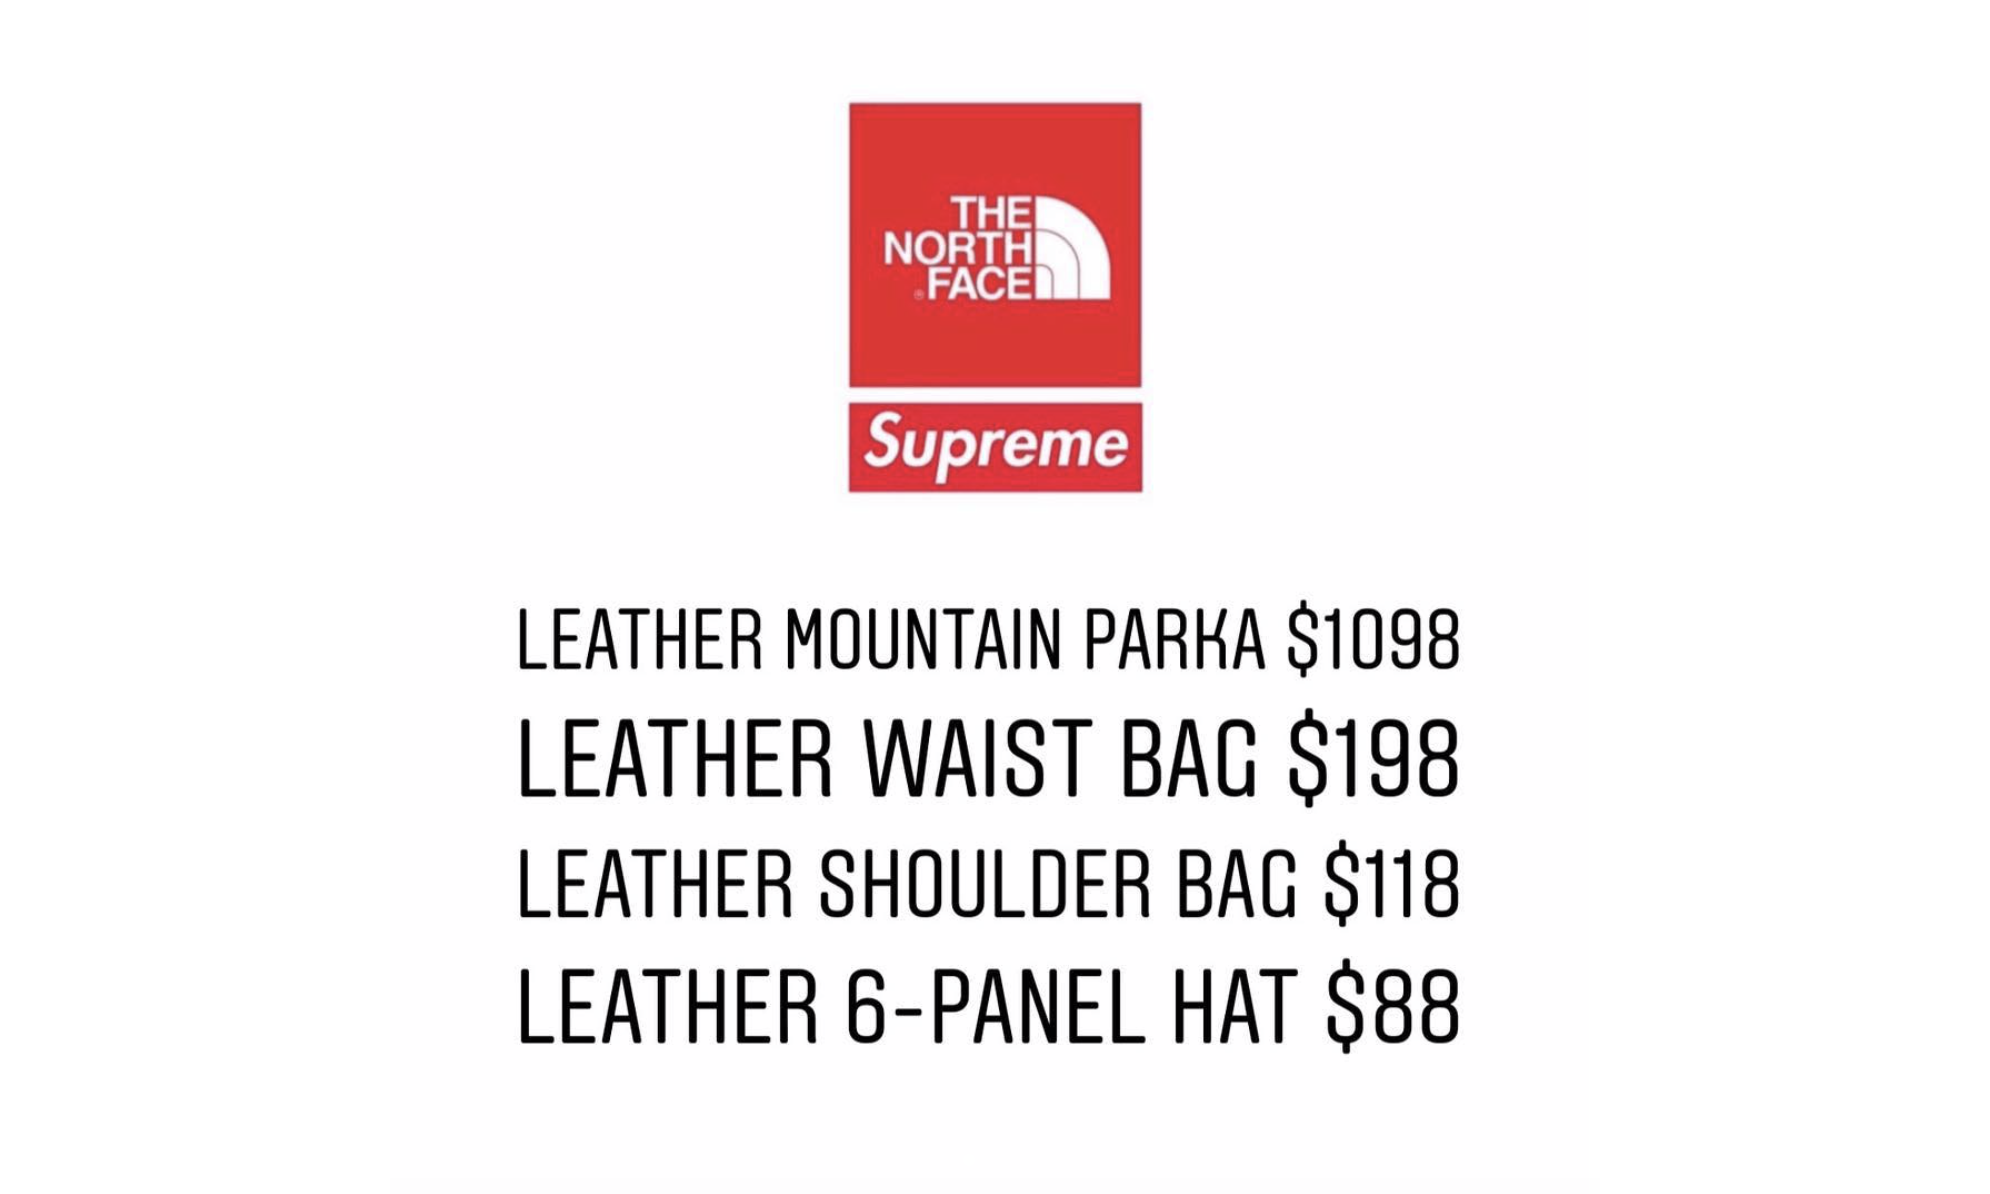 Supreme x TNF 皮冲锋衣的售价高达 1098 美元？